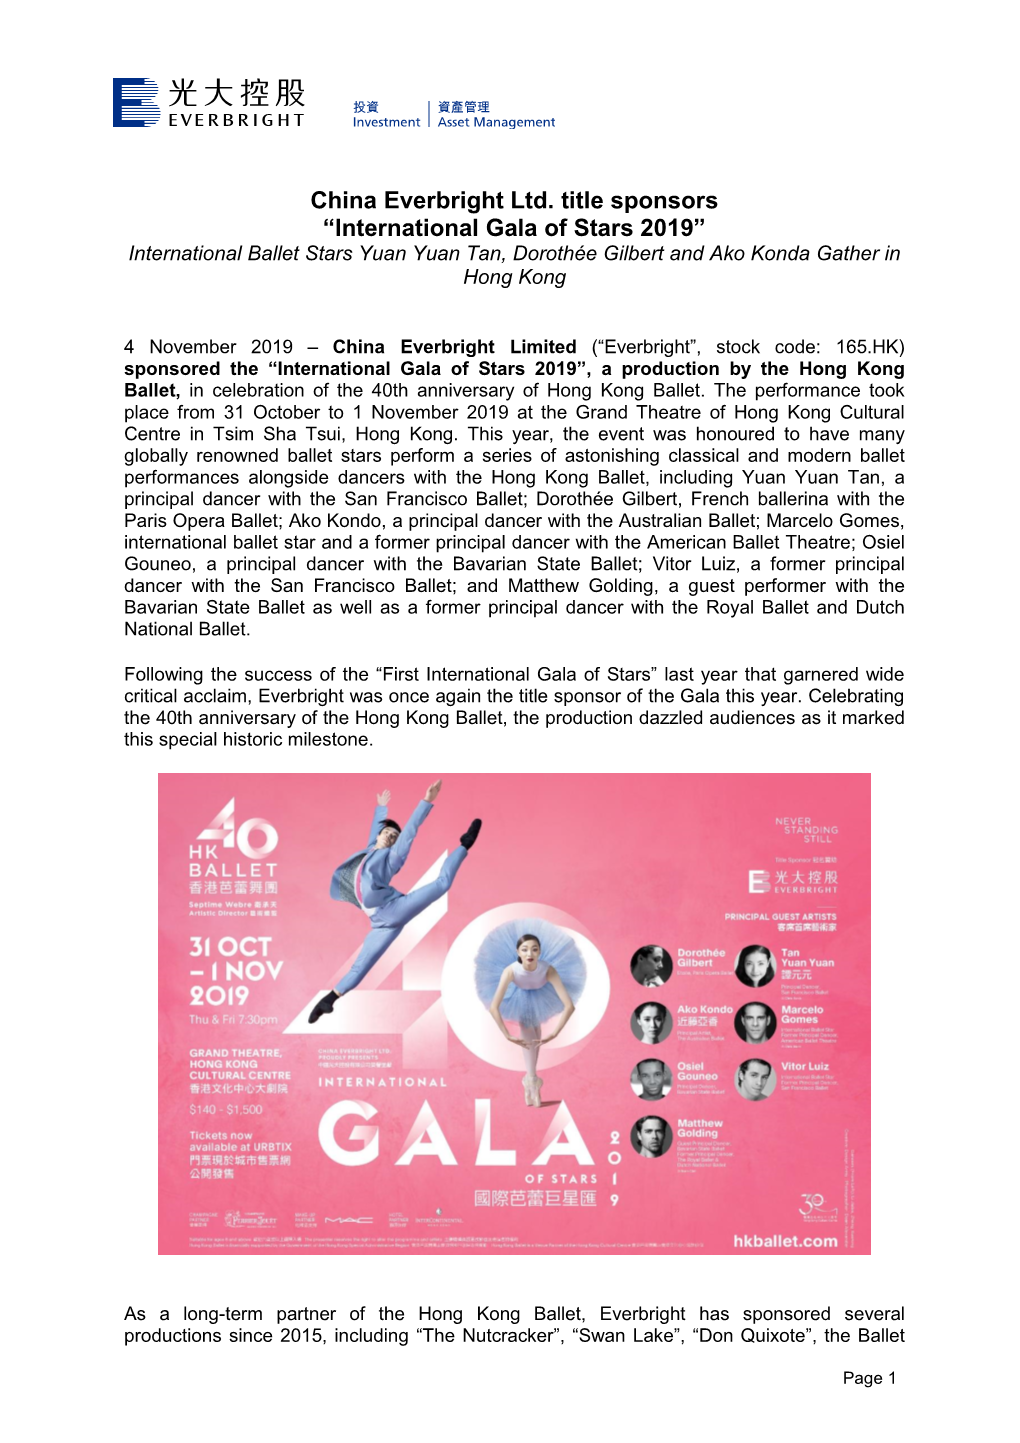 China Everbright Ltd. Title Sponsors “International Gala of Stars 2019” International Ballet Stars Yuan Yuan Tan, Dorothée Gilbert and Ako Konda Gather in Hong Kong